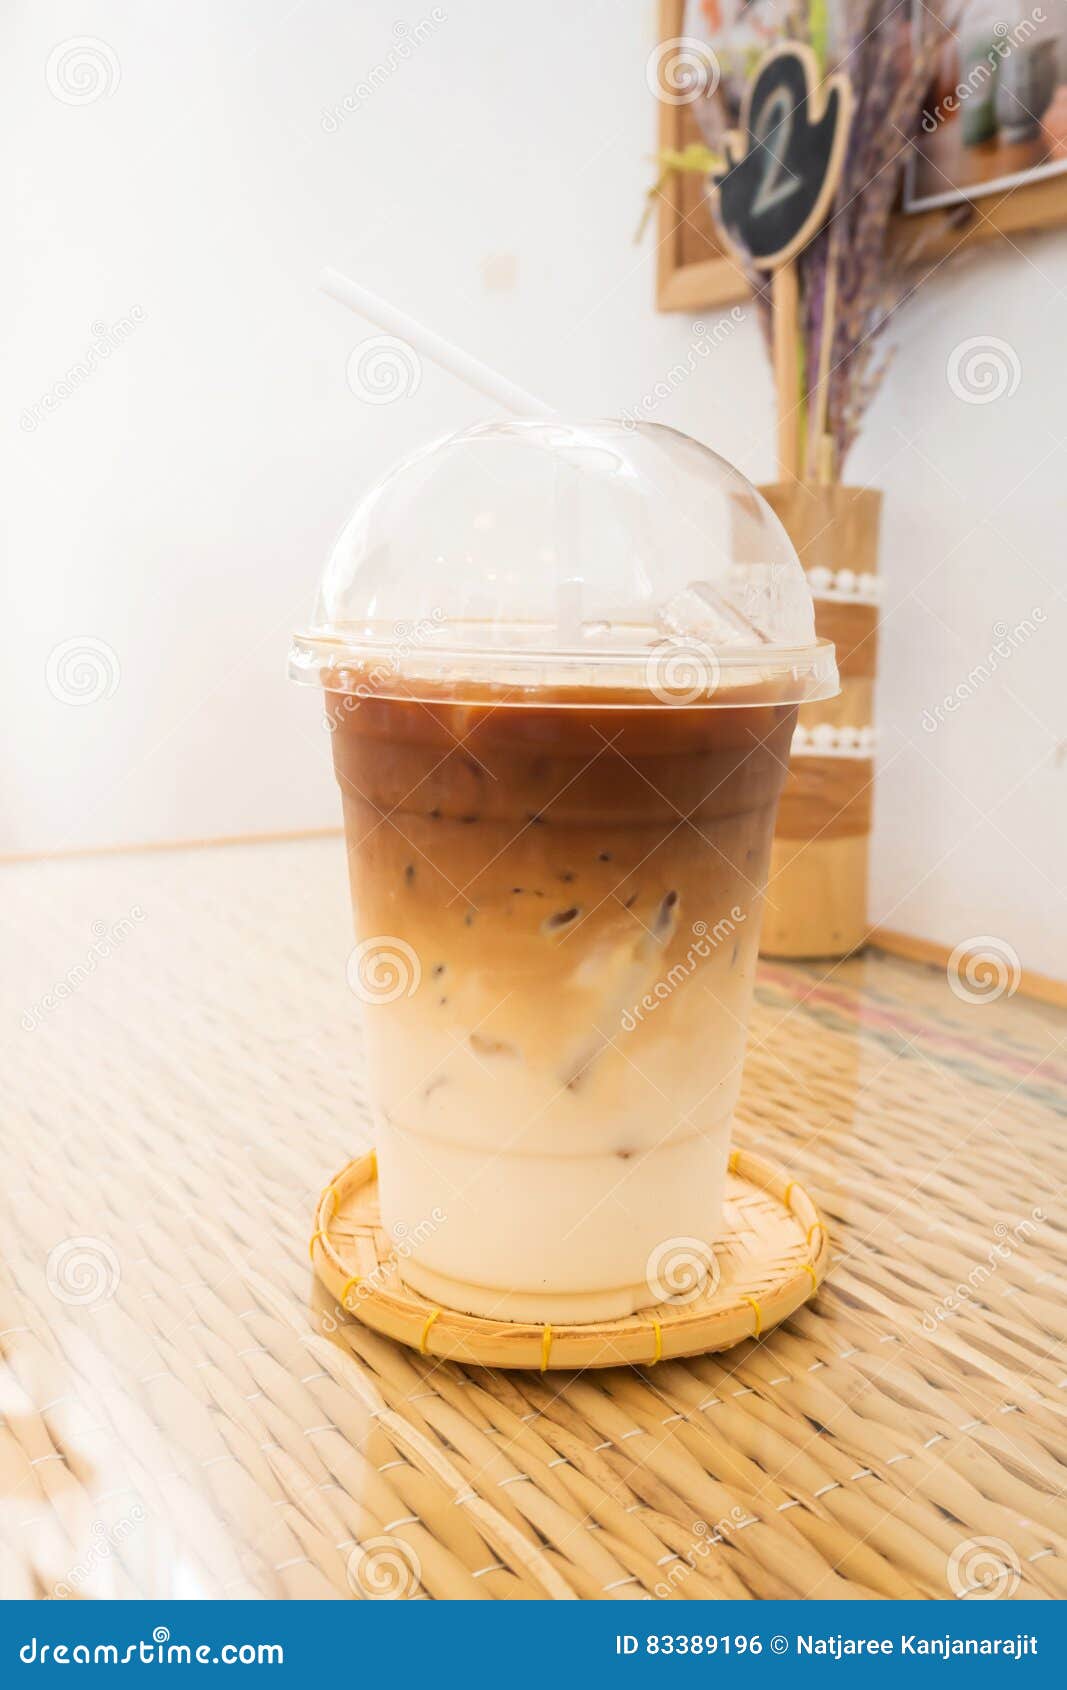 https://thumbs.dreamstime.com/z/ice-latte-plastic-cup-take-away-easy-package-83389196.jpg